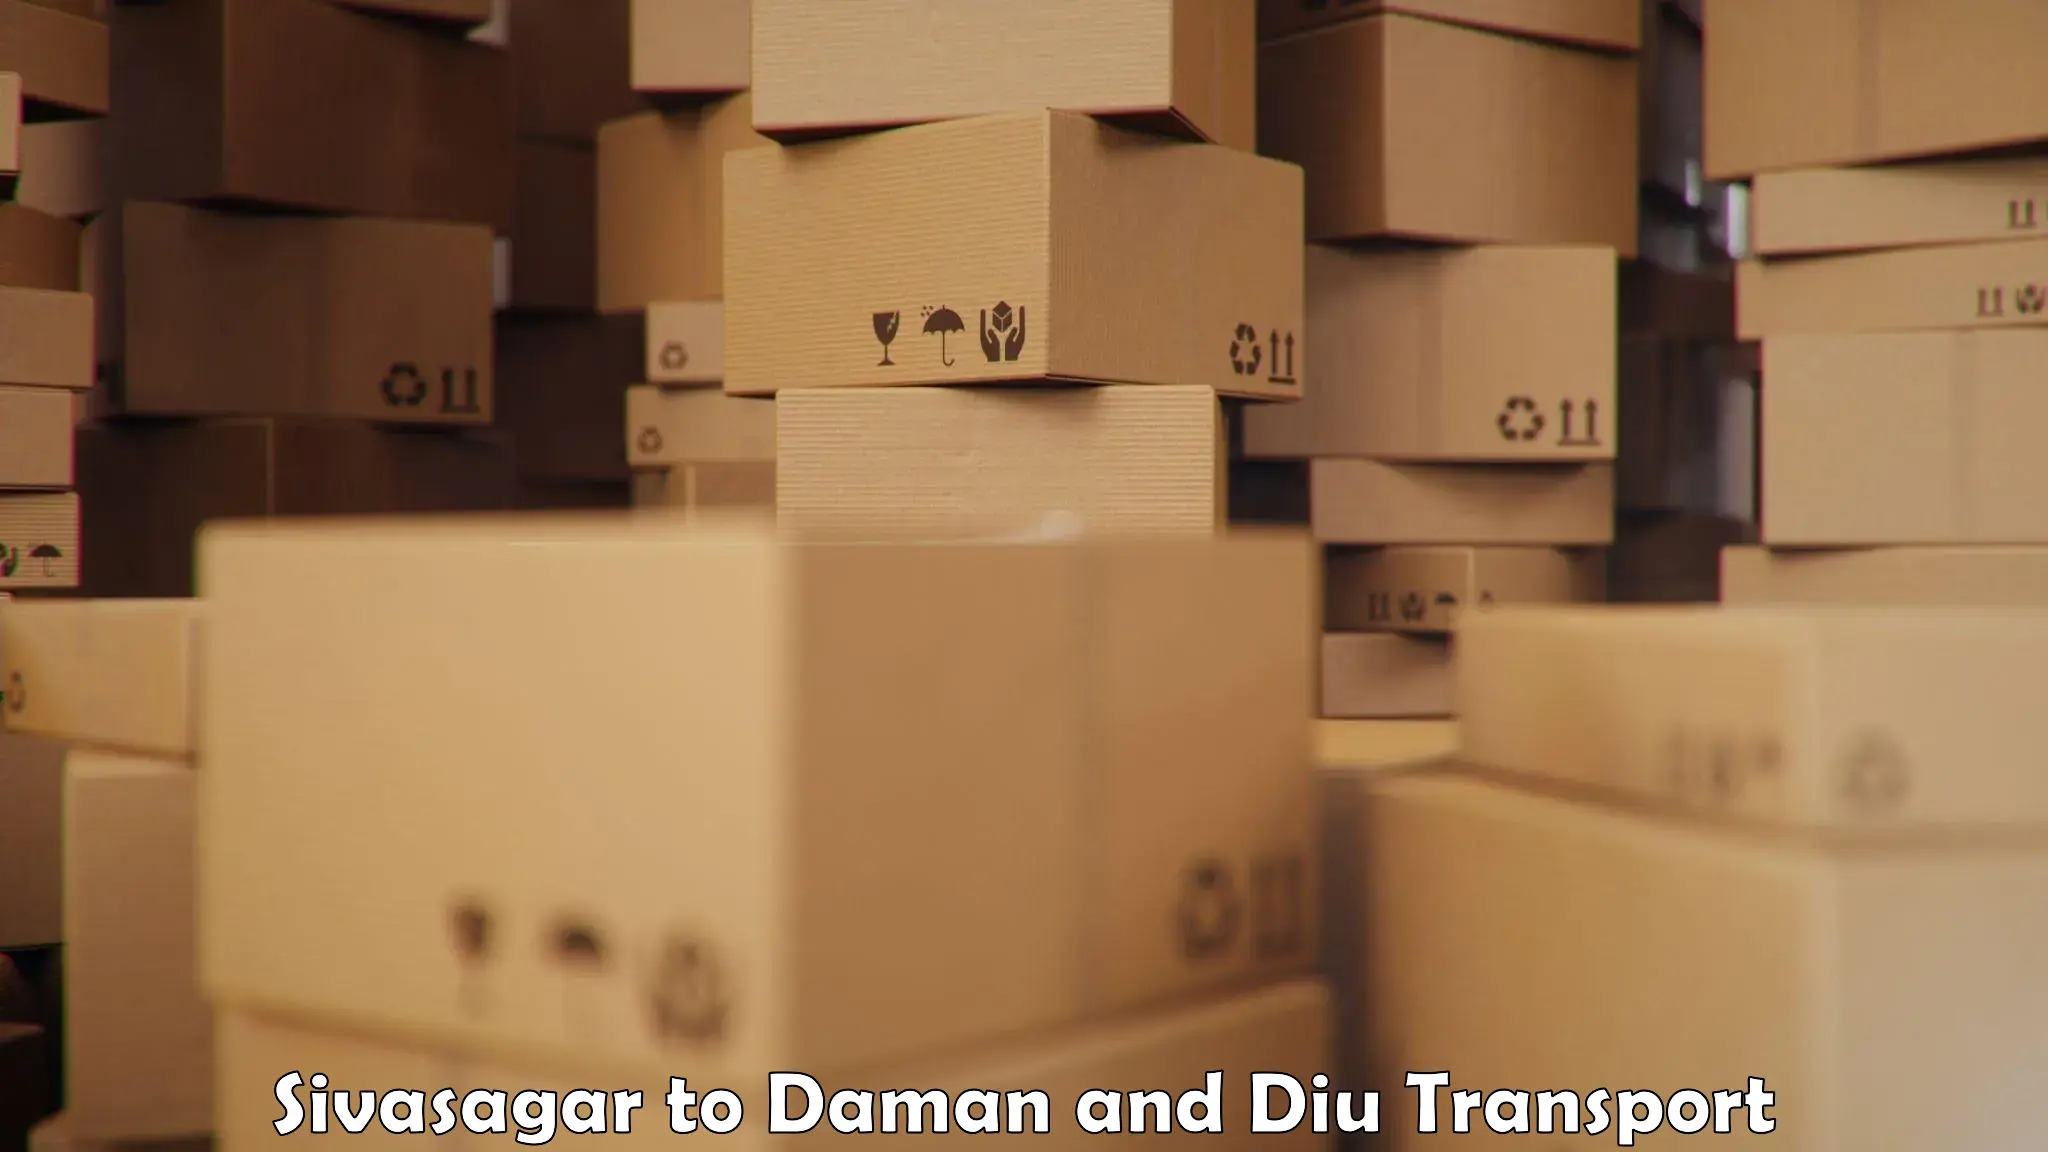 Shipping partner Sivasagar to Daman and Diu